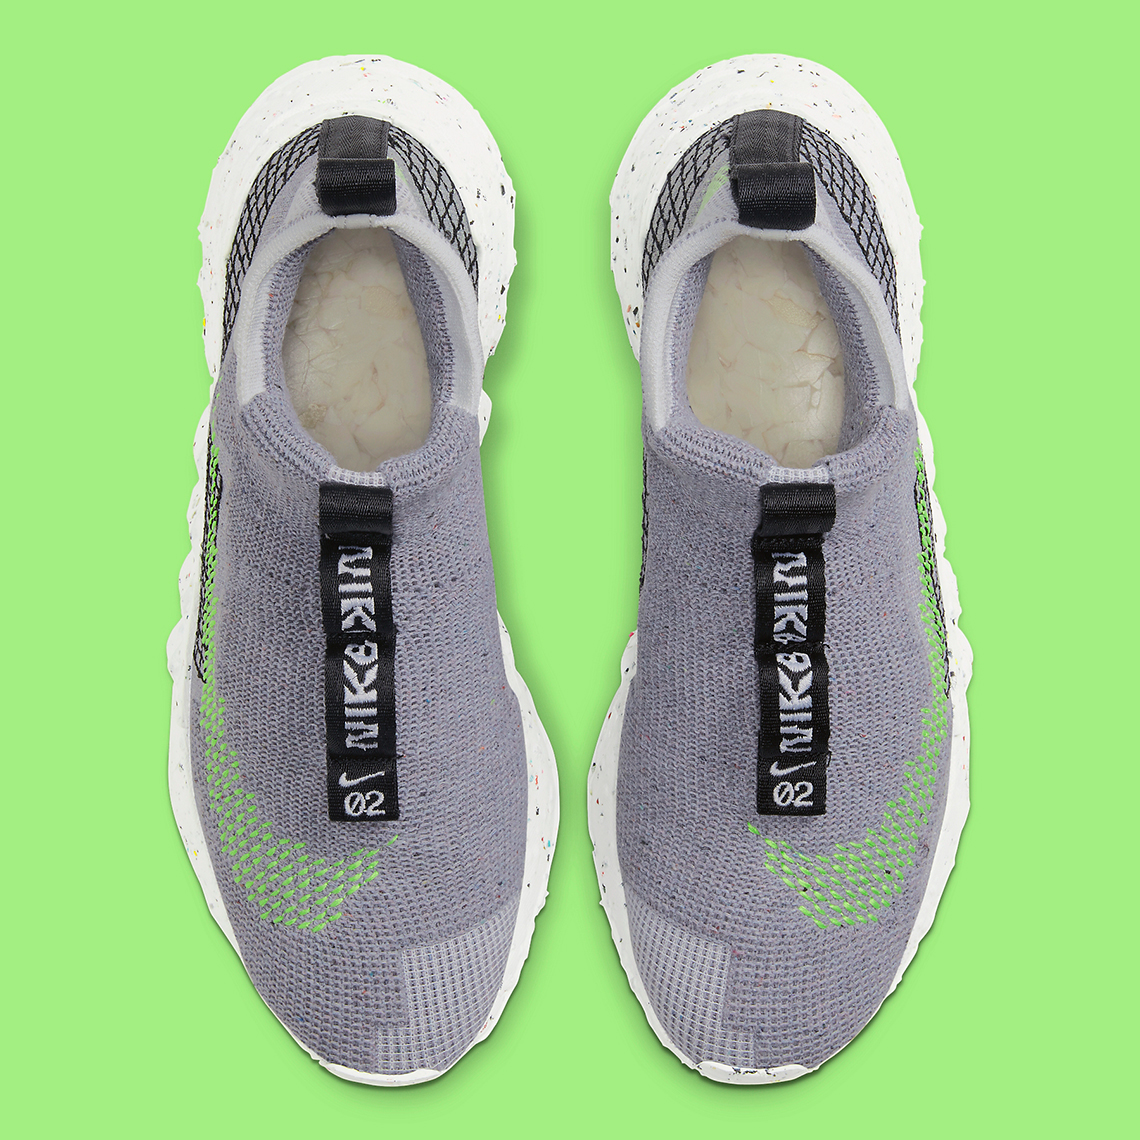 Nike Space Hippie 02 Grey Volt CQ3988-002 Release | SneakerNews.com